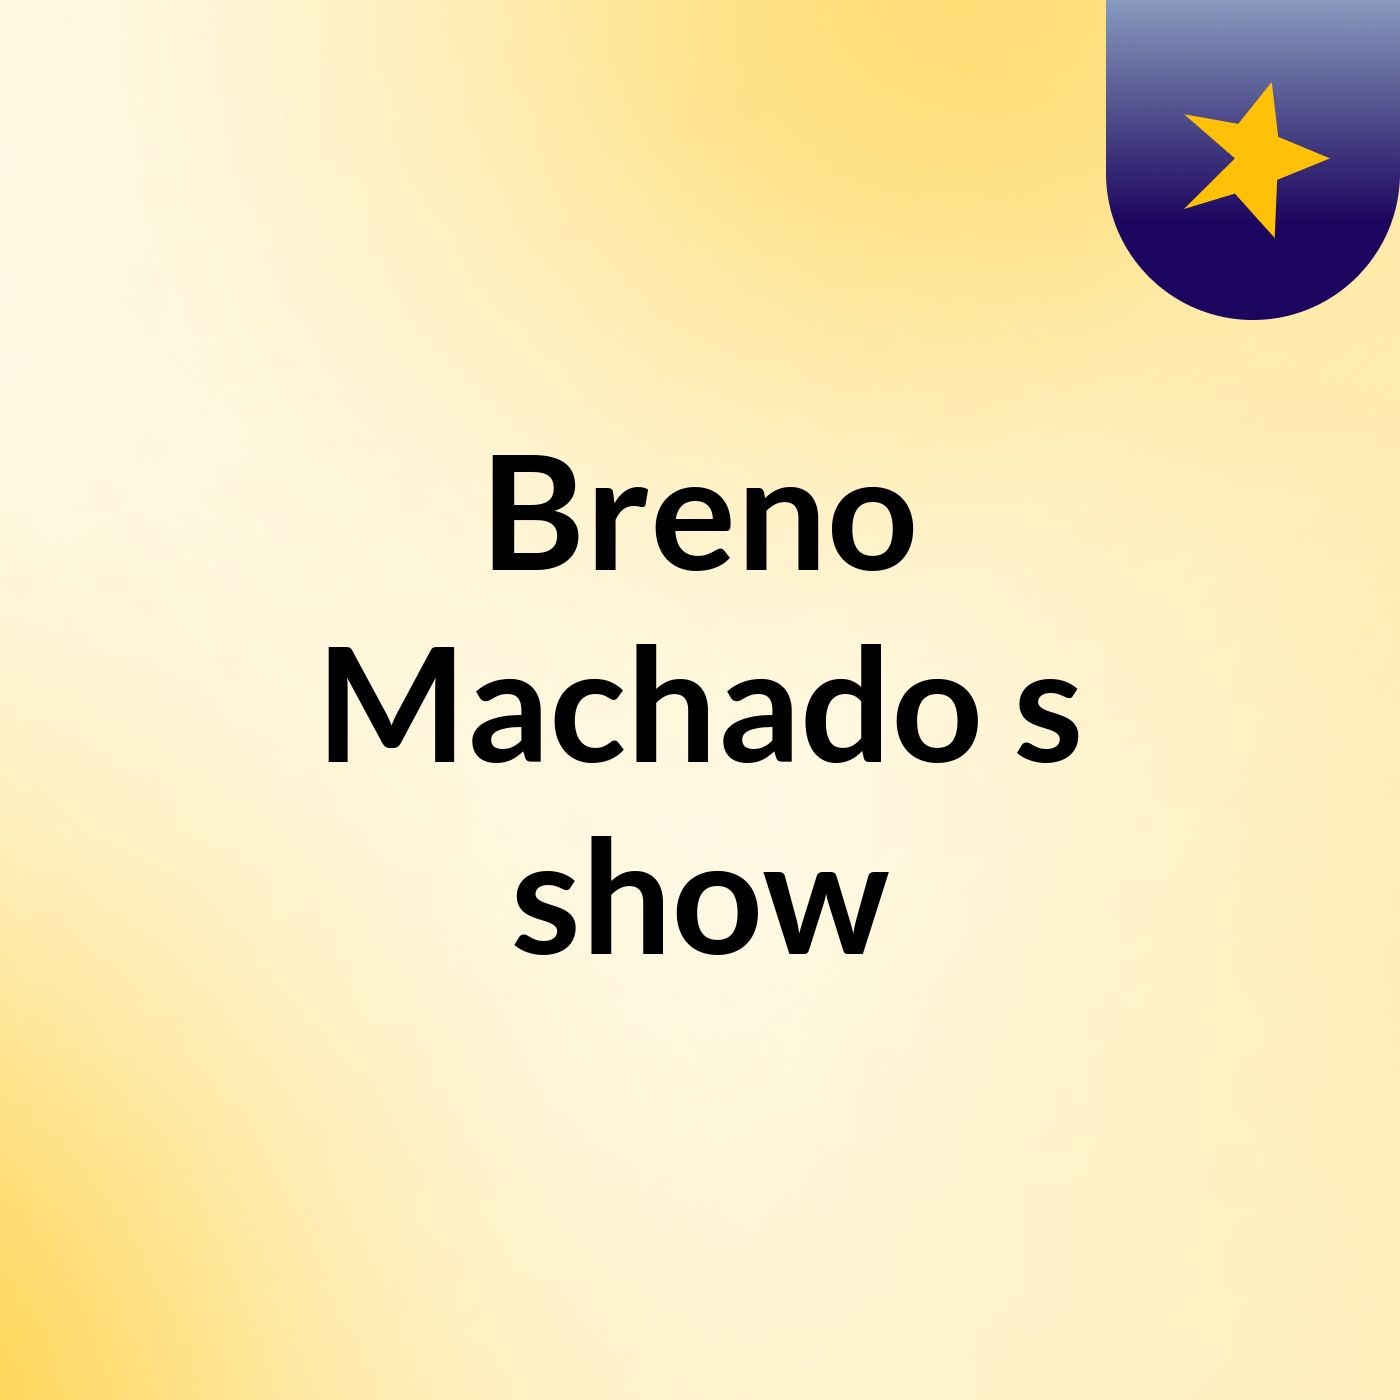 Breno Machado's show